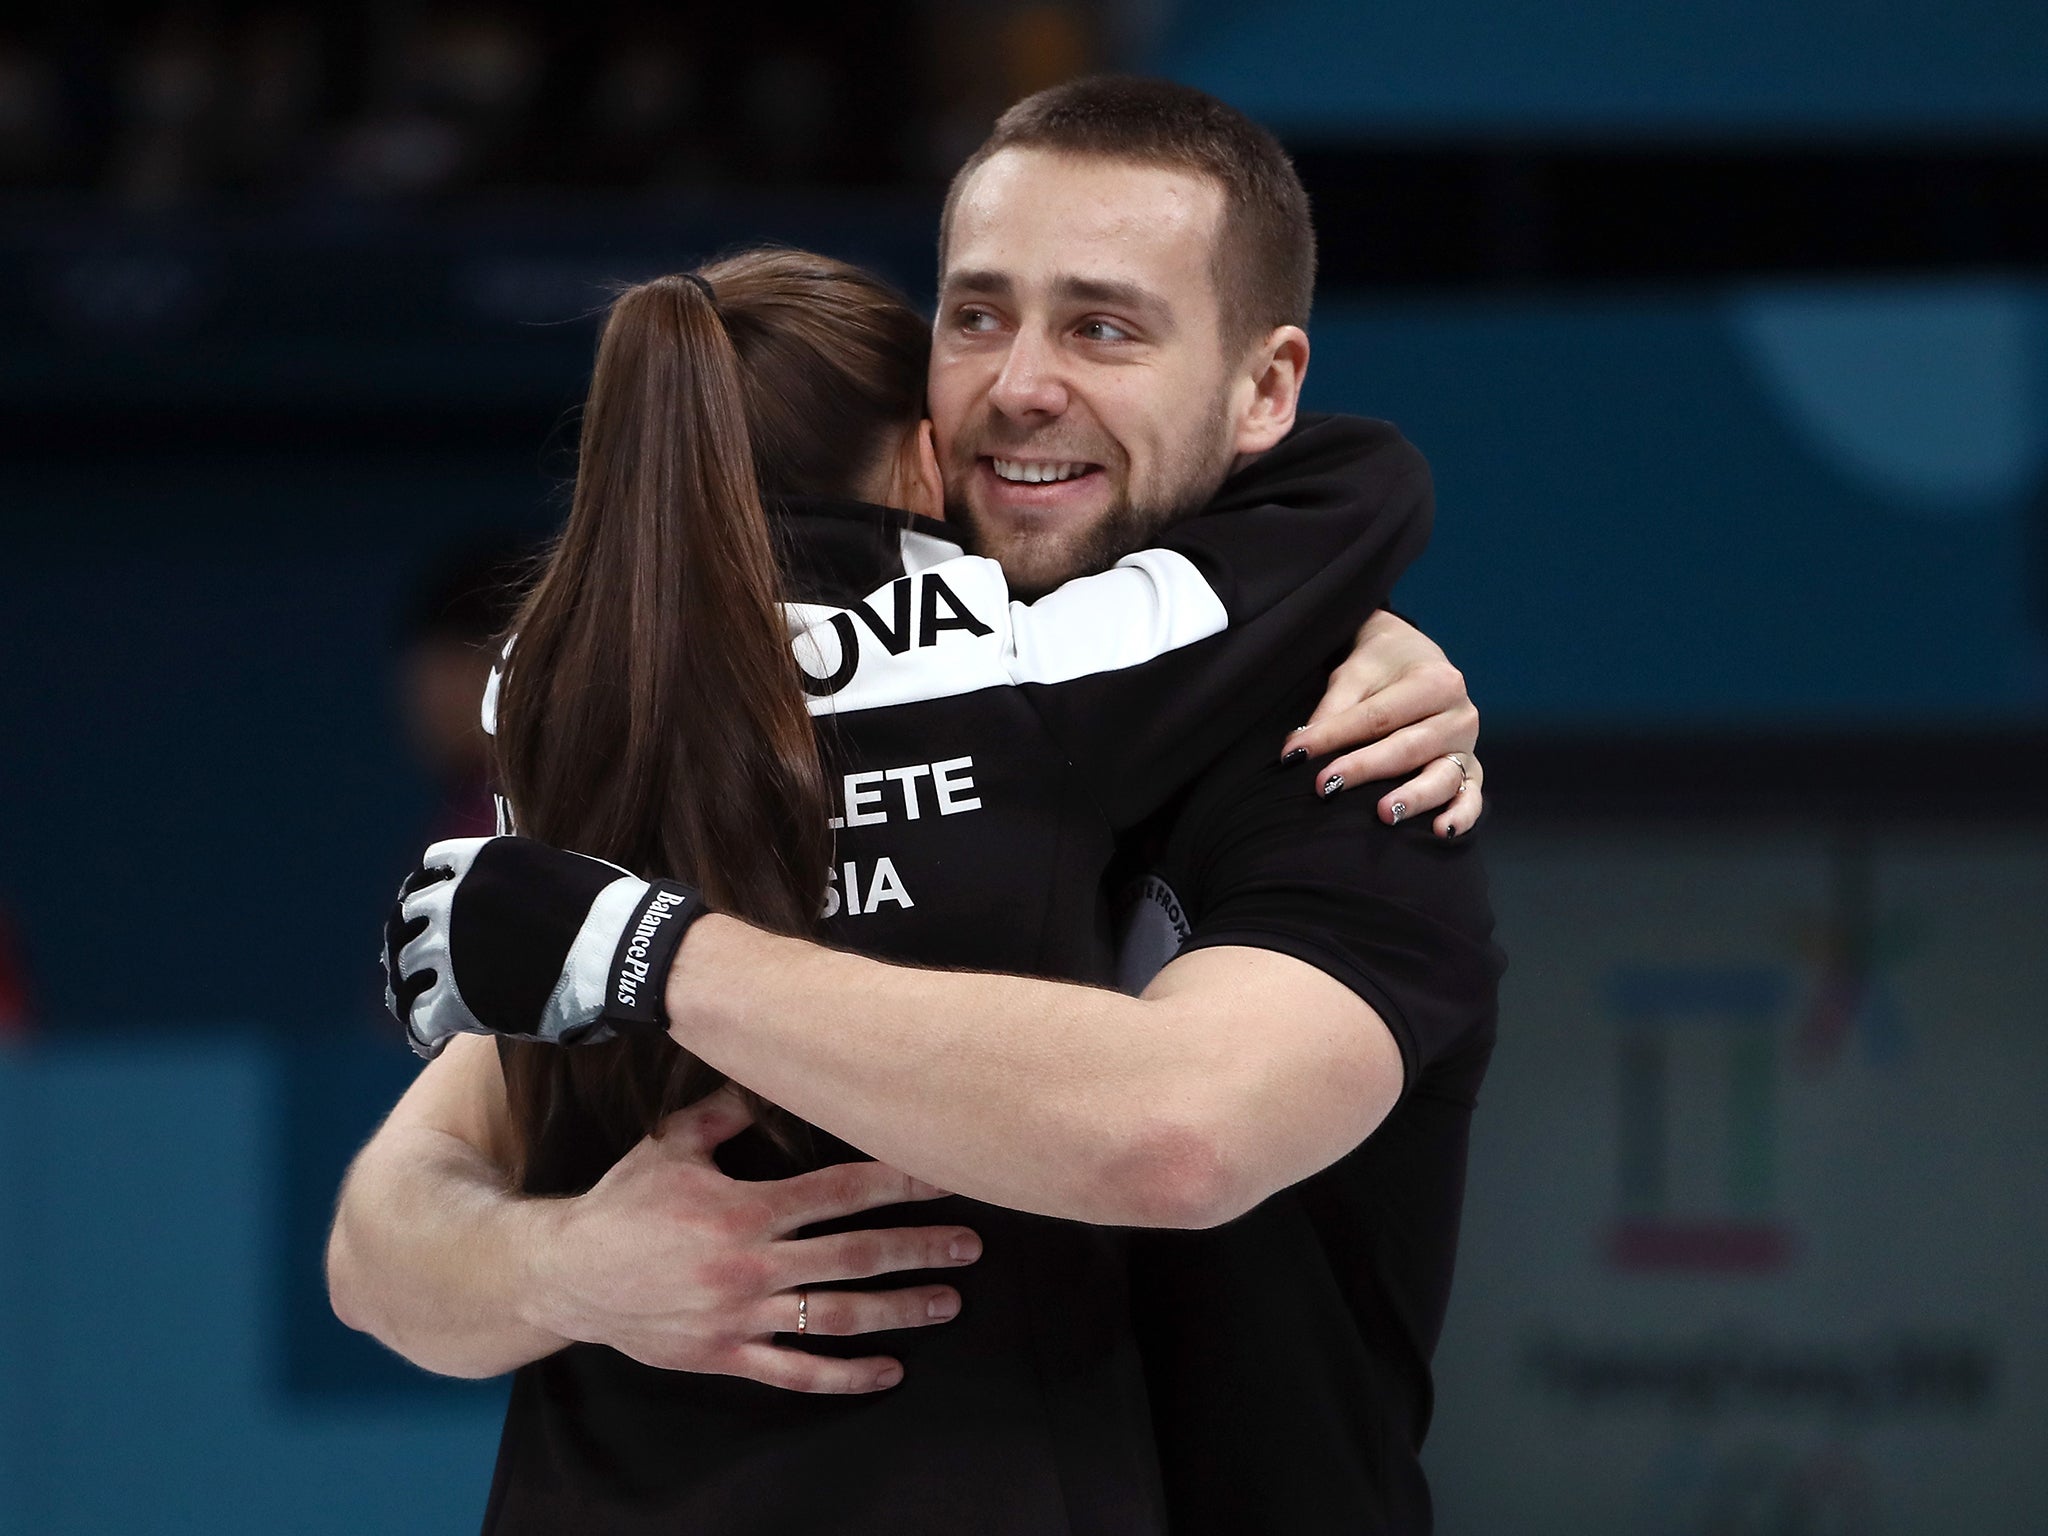 Krushelnitsky claimed bronze with his wife Anastasia Bryzgalova